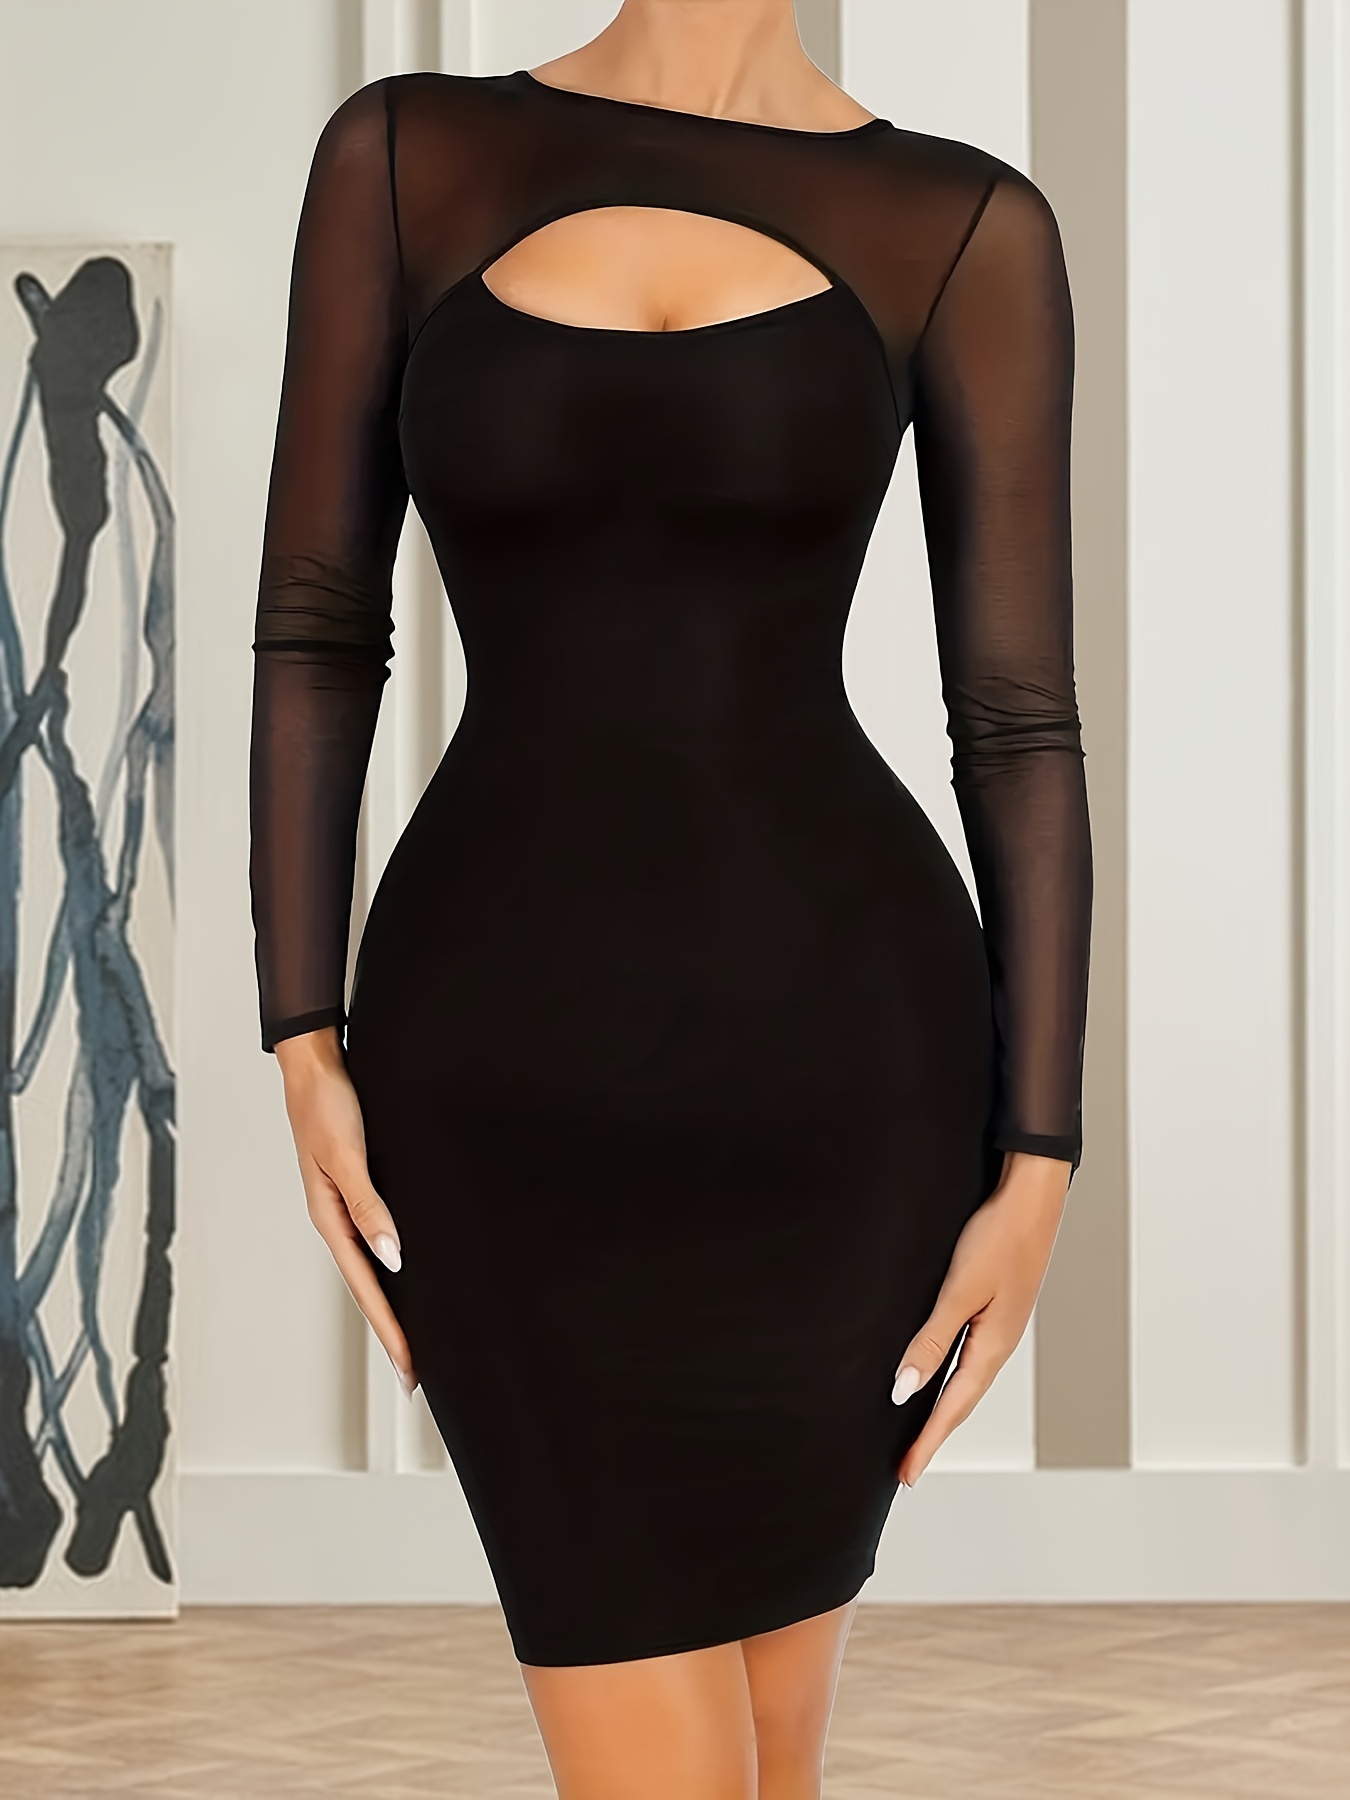  Black Dress With Sheer Sleeves